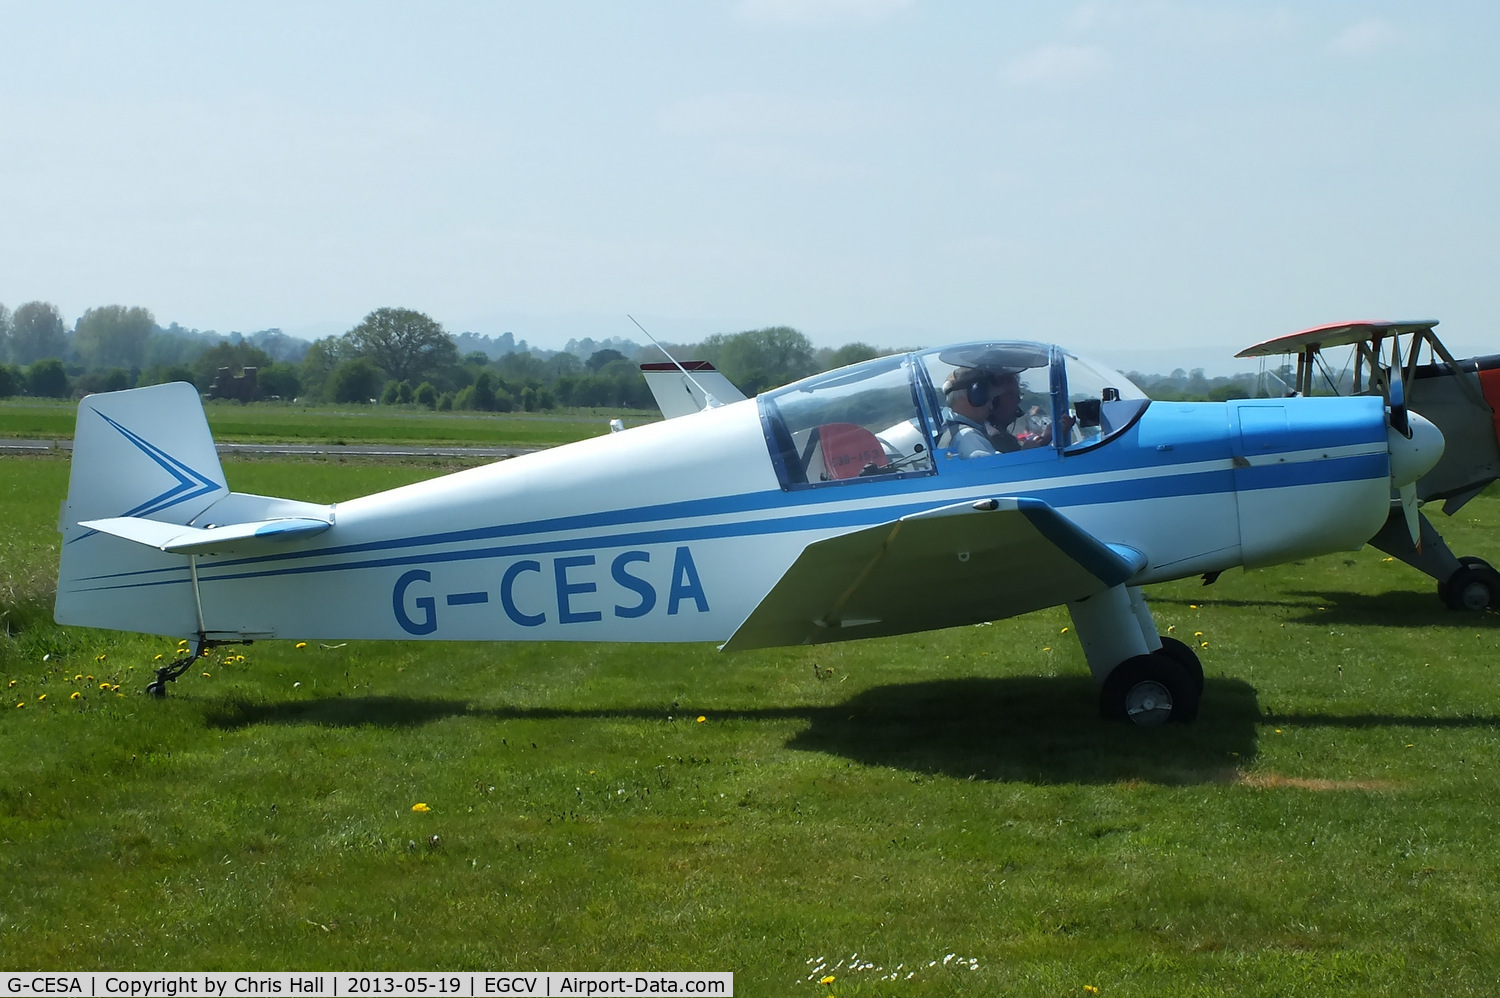 G-CESA, 2009 Jodel DR-1050 Ambassadeur C/N PFA 304-13753, at the Vintage Aircraft flyin